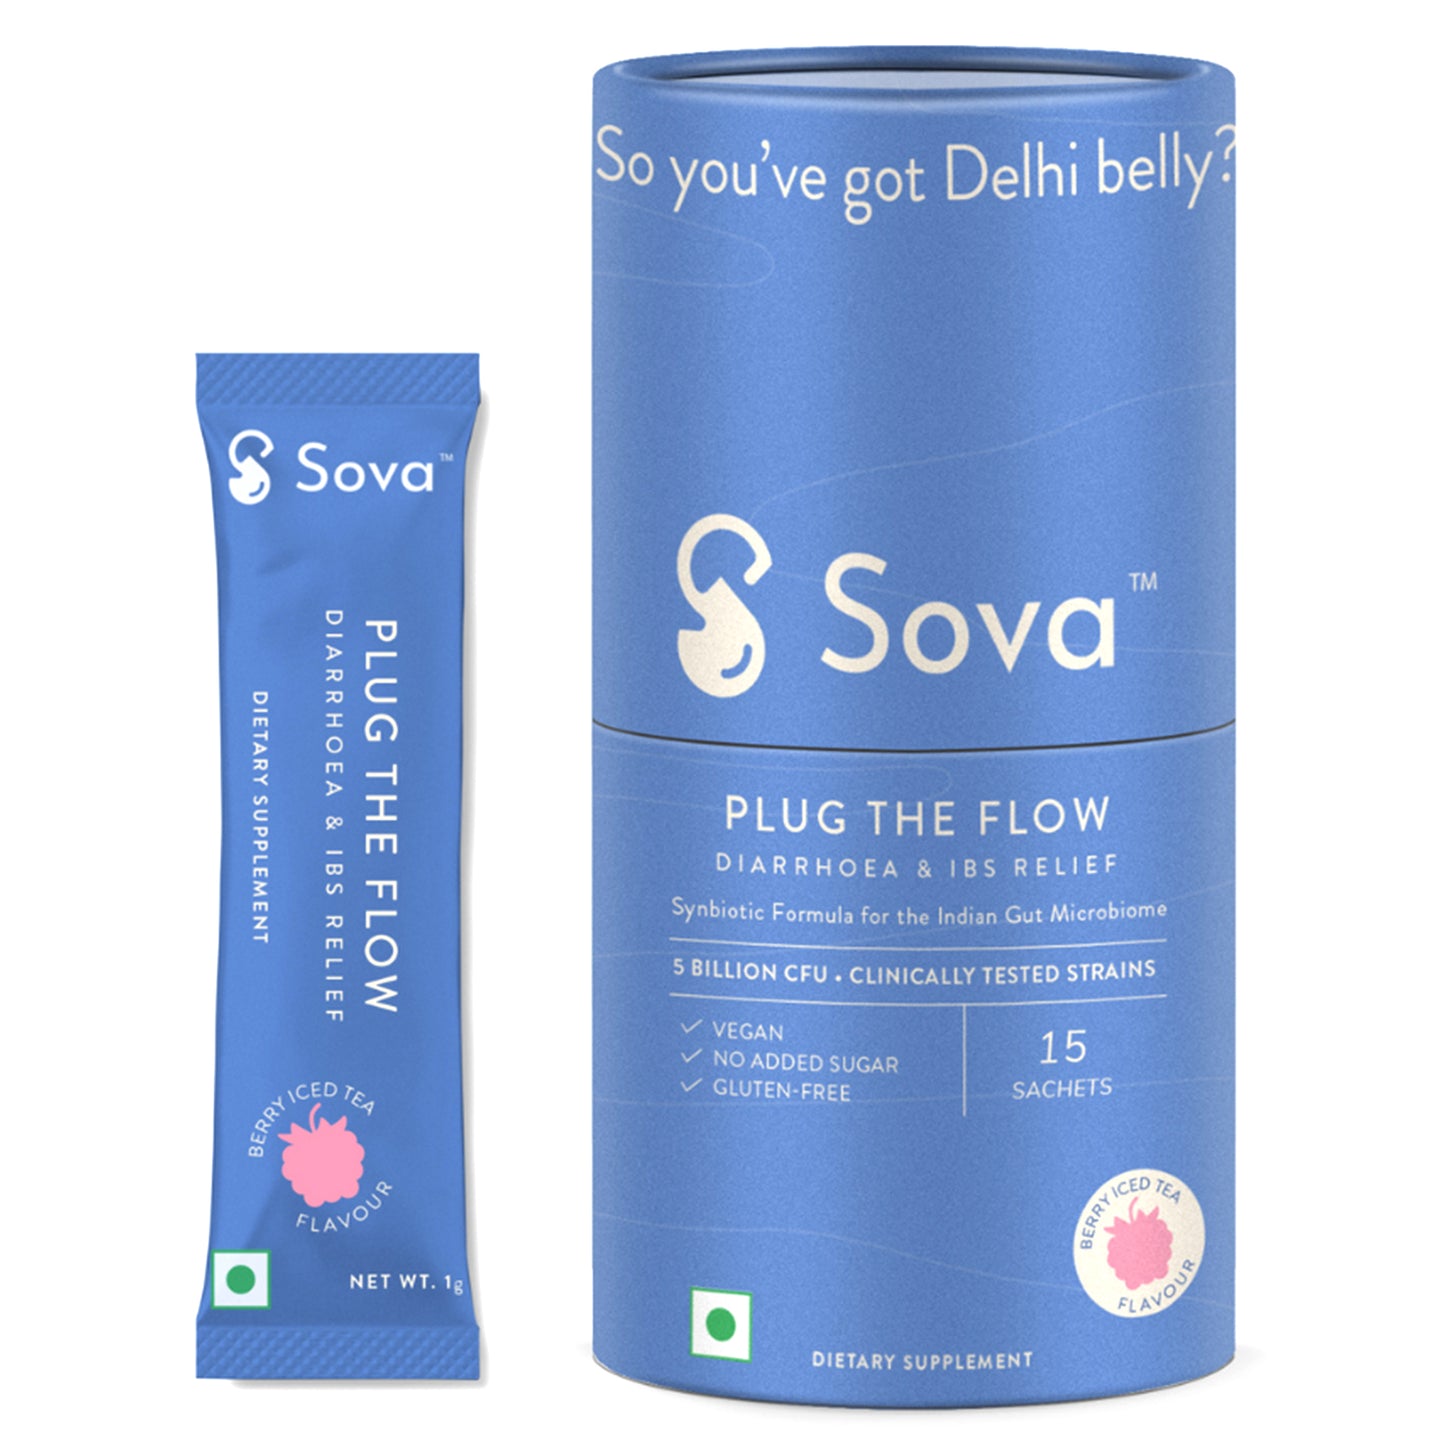 Sova Plug the Flow Diarrhoea & IBS Relief Mixed Berry Flavour, 15 Sachets